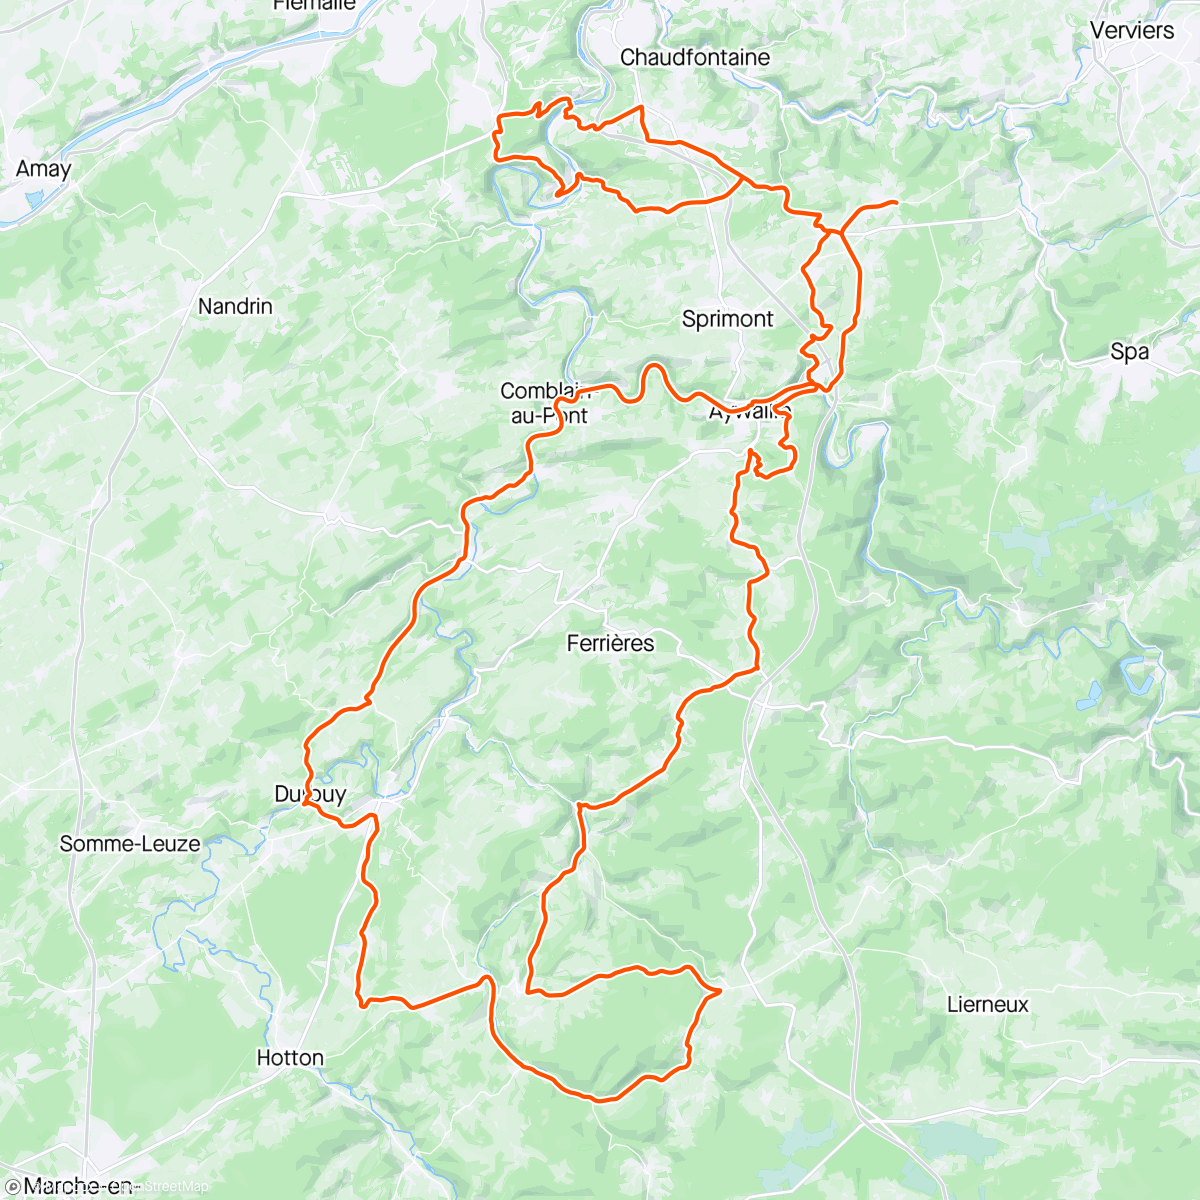 Mapa de la actividad (Liege Bastogne Liege ride.
Heroic ride. Pluie grêle vent froid 👍👍😎)